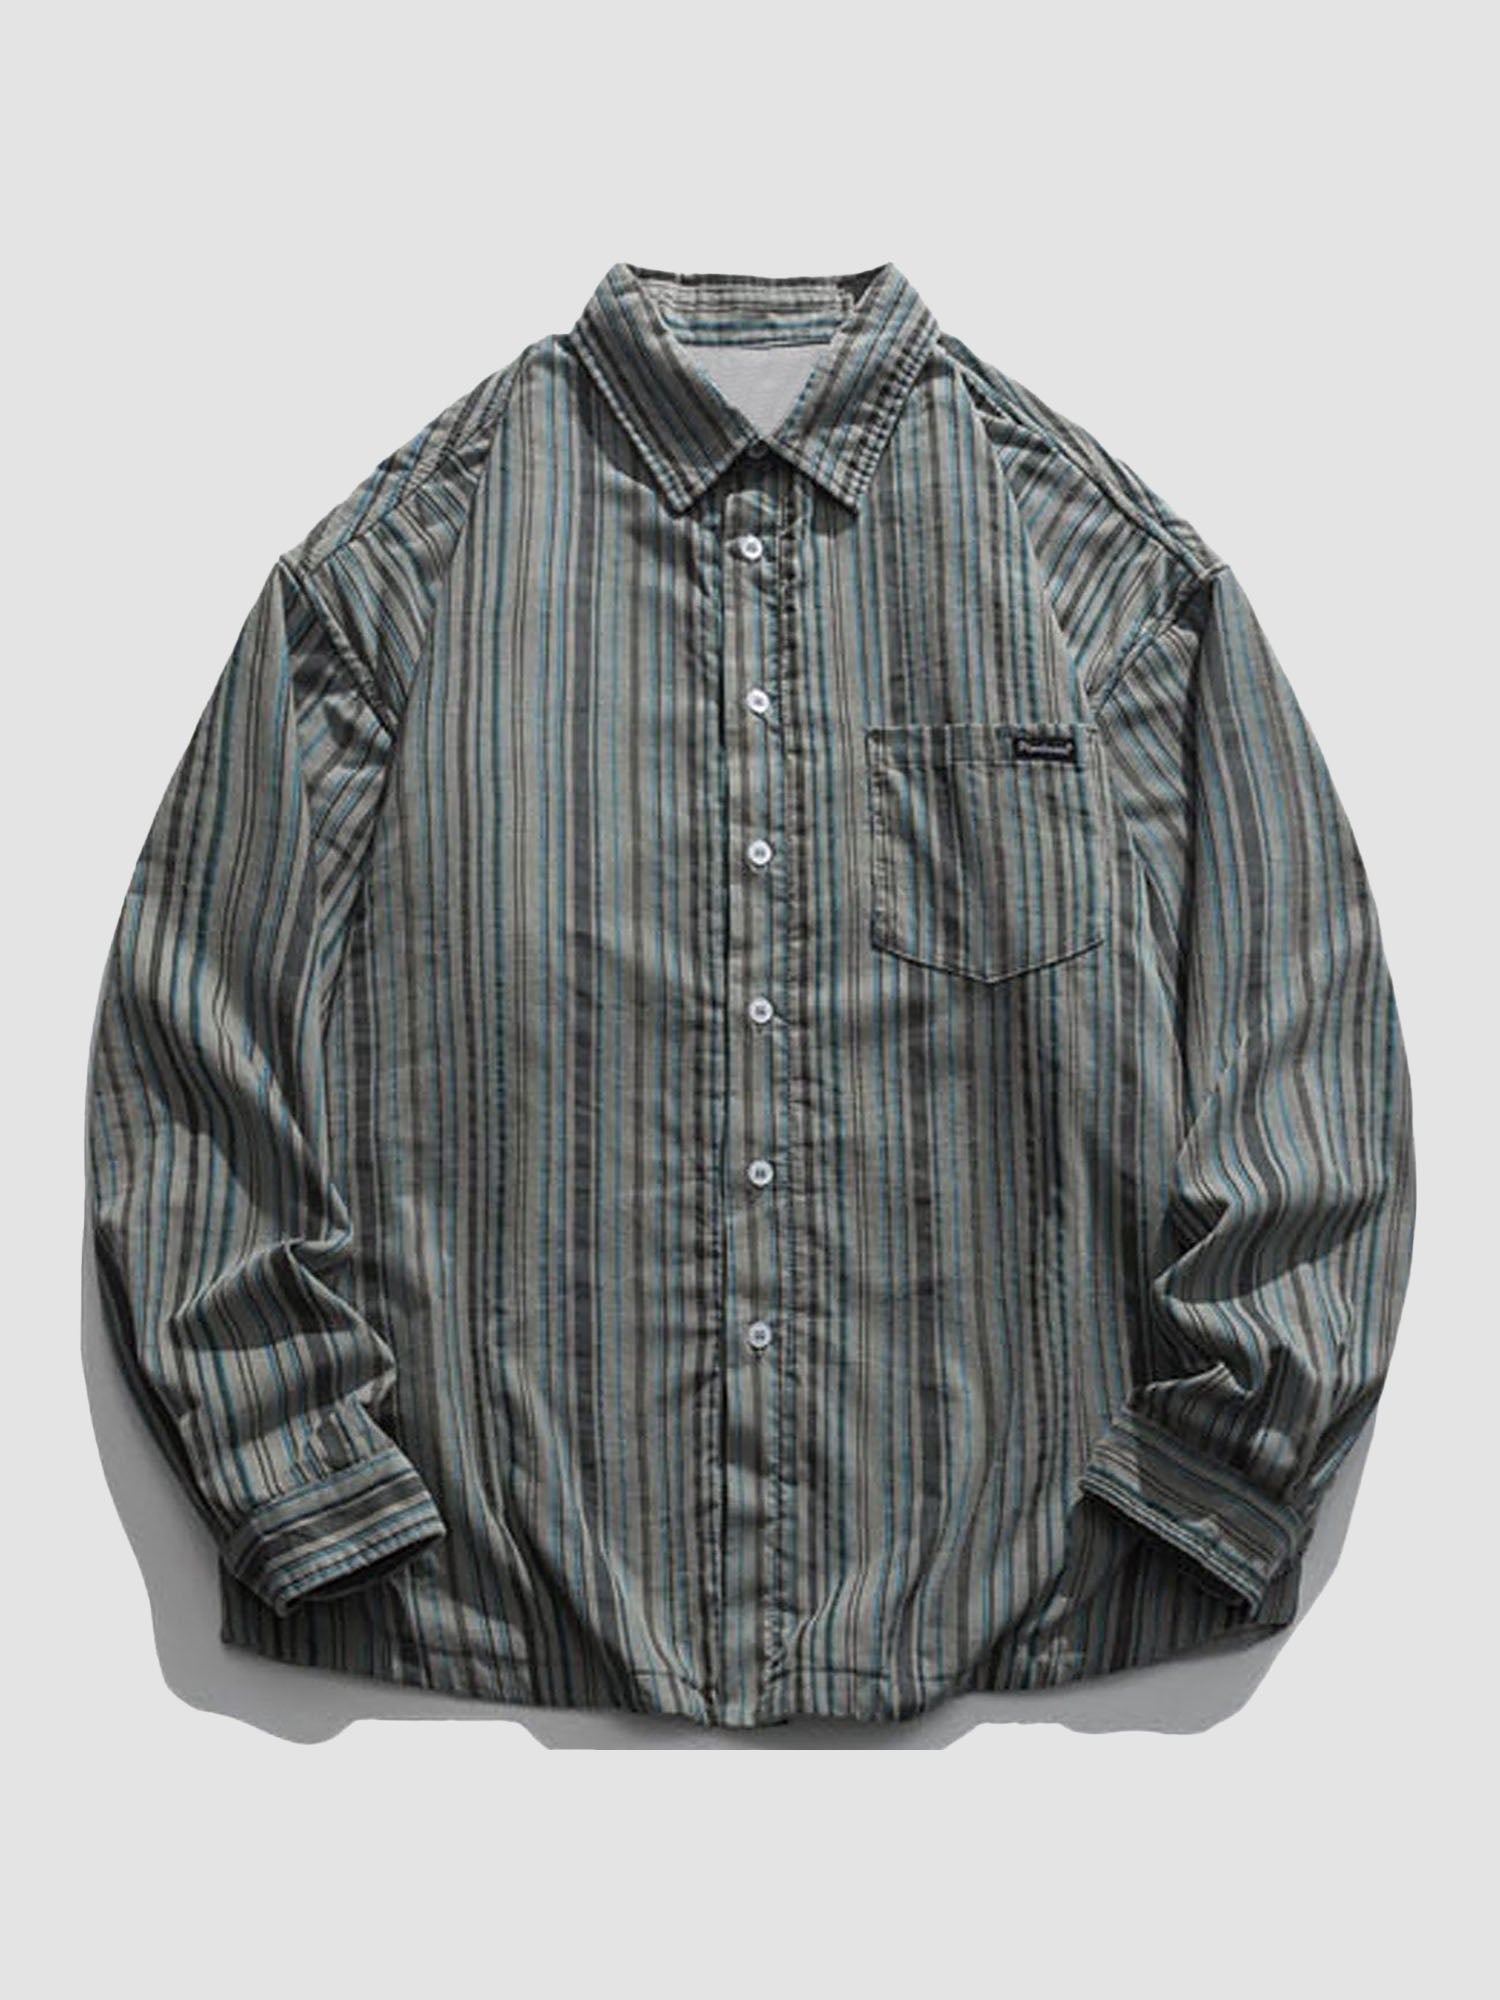 JUSTNOTAG Vertical Stripes Plus Fleece Long-sleeved Shirts